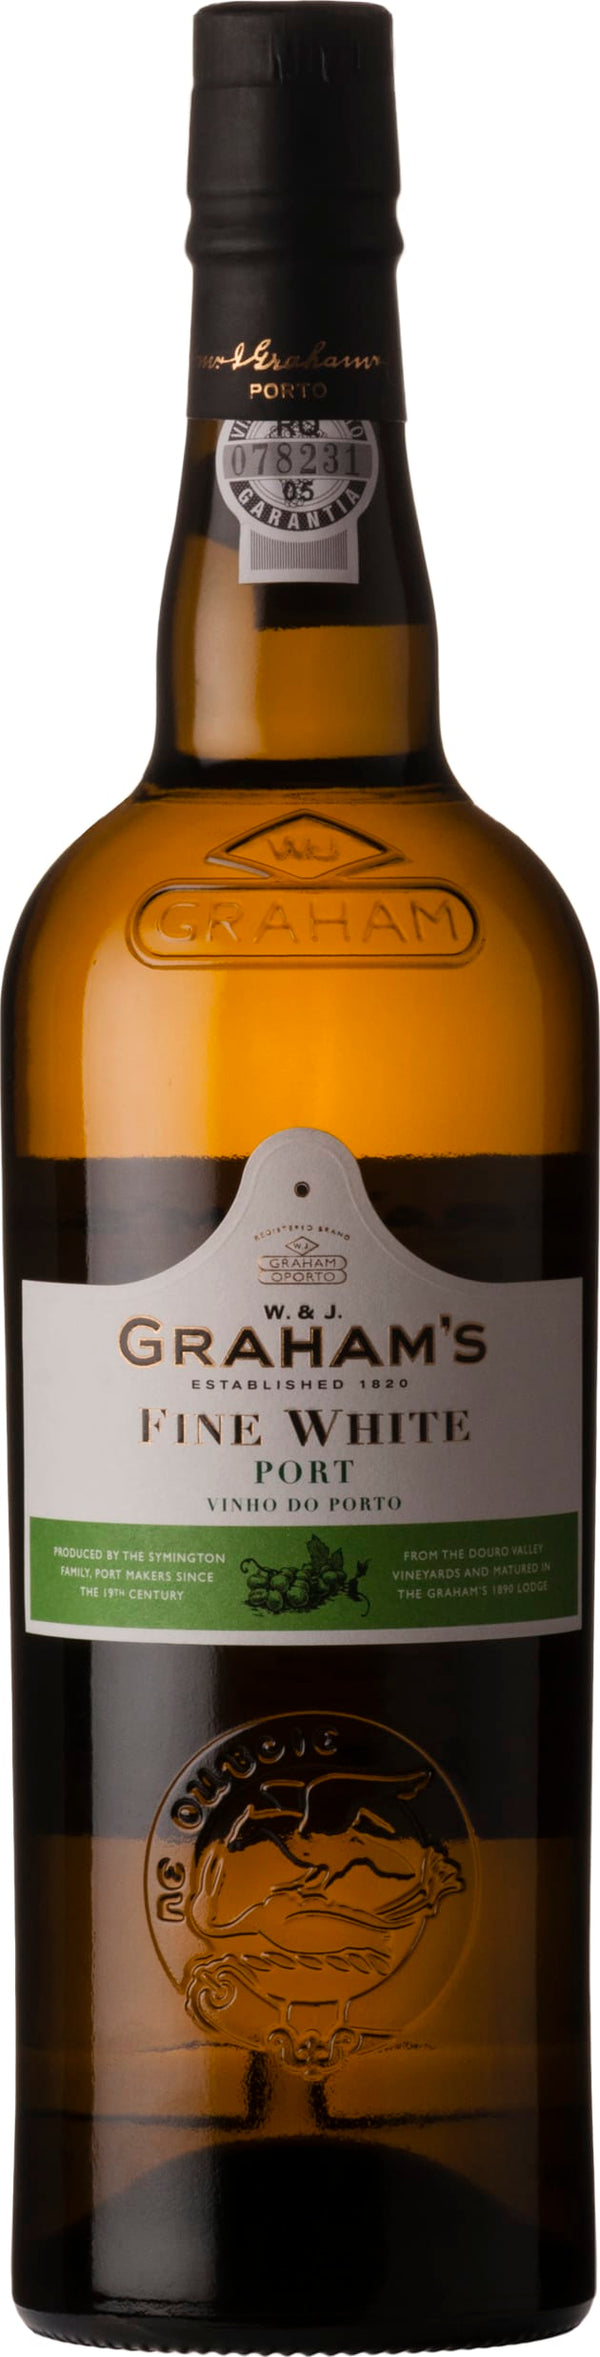 Grahams Fine White Port NV6x75cl - Just Wines 